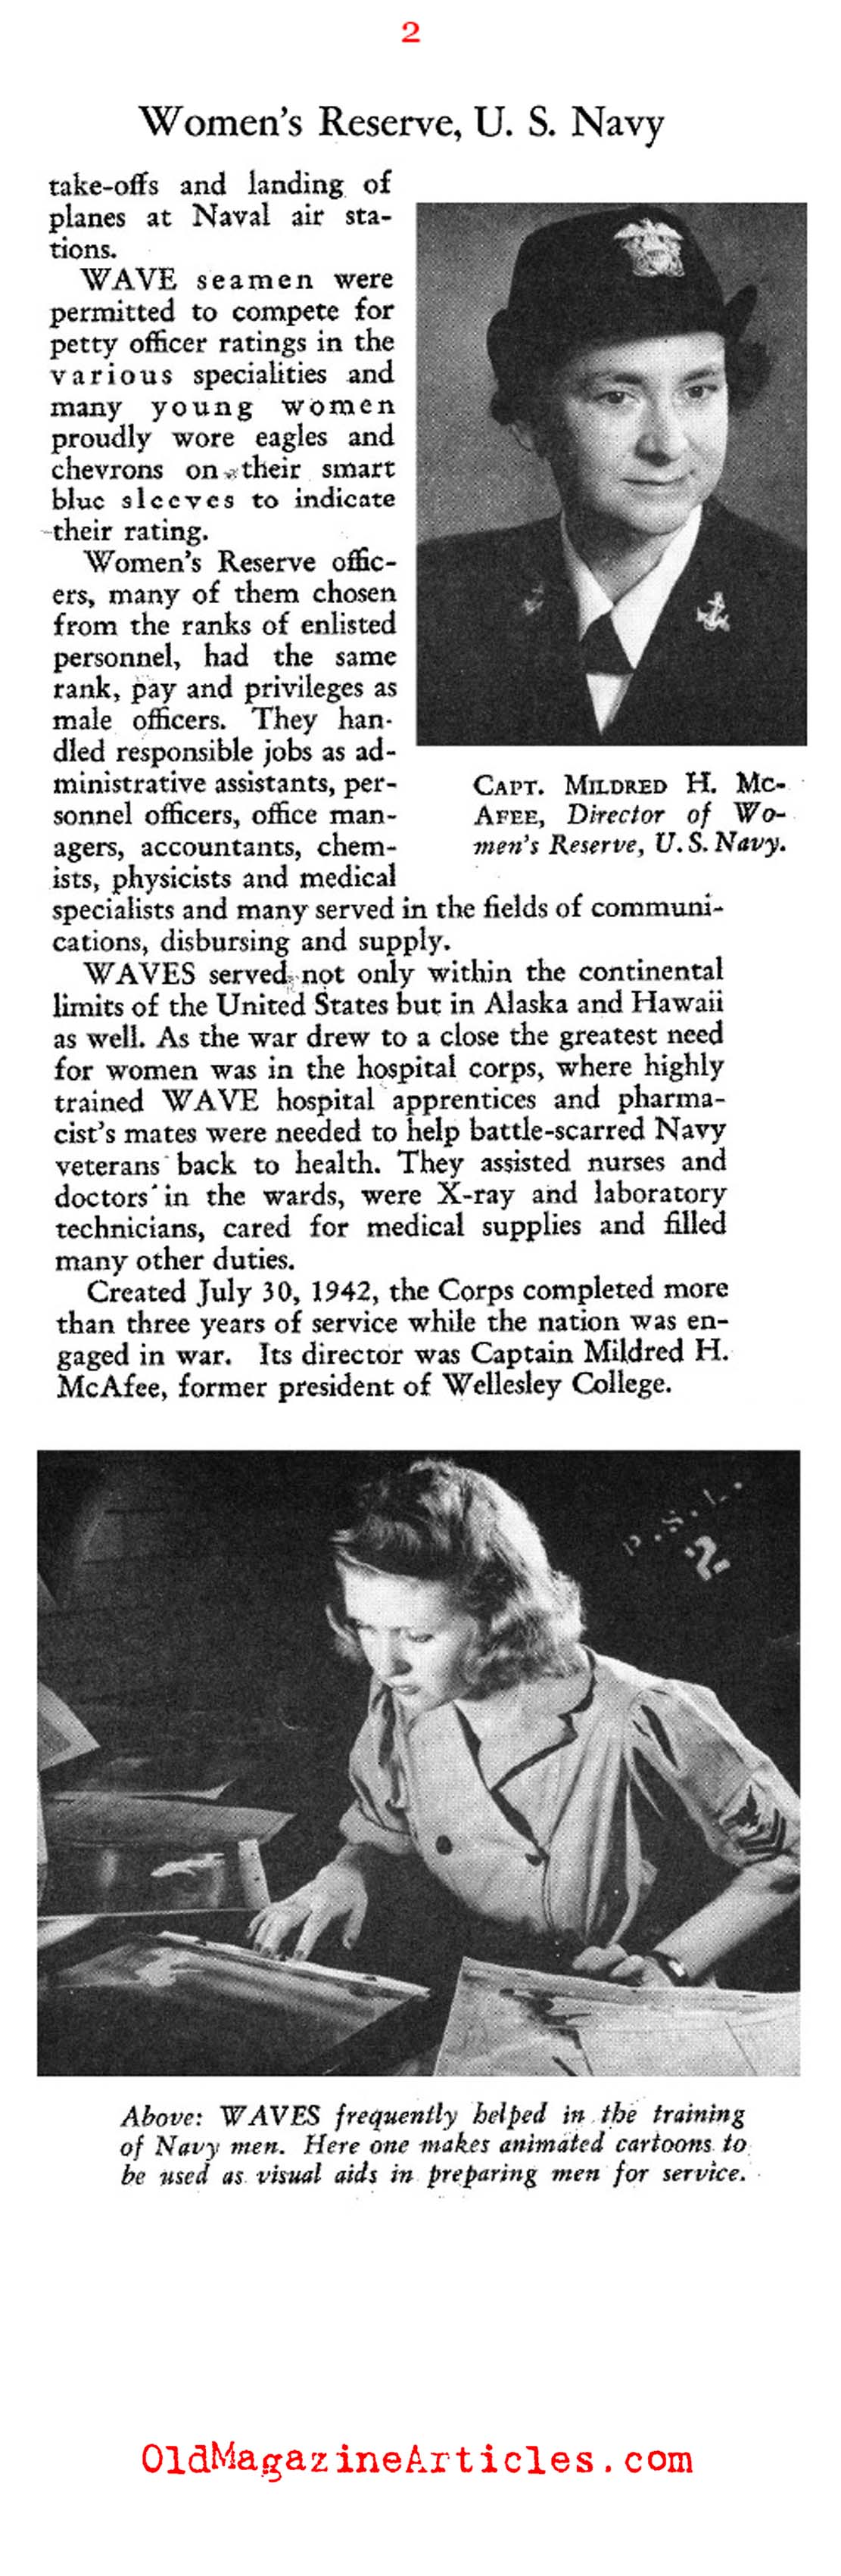 The Women of the U.S. Navy (Think Magazine, 1946)